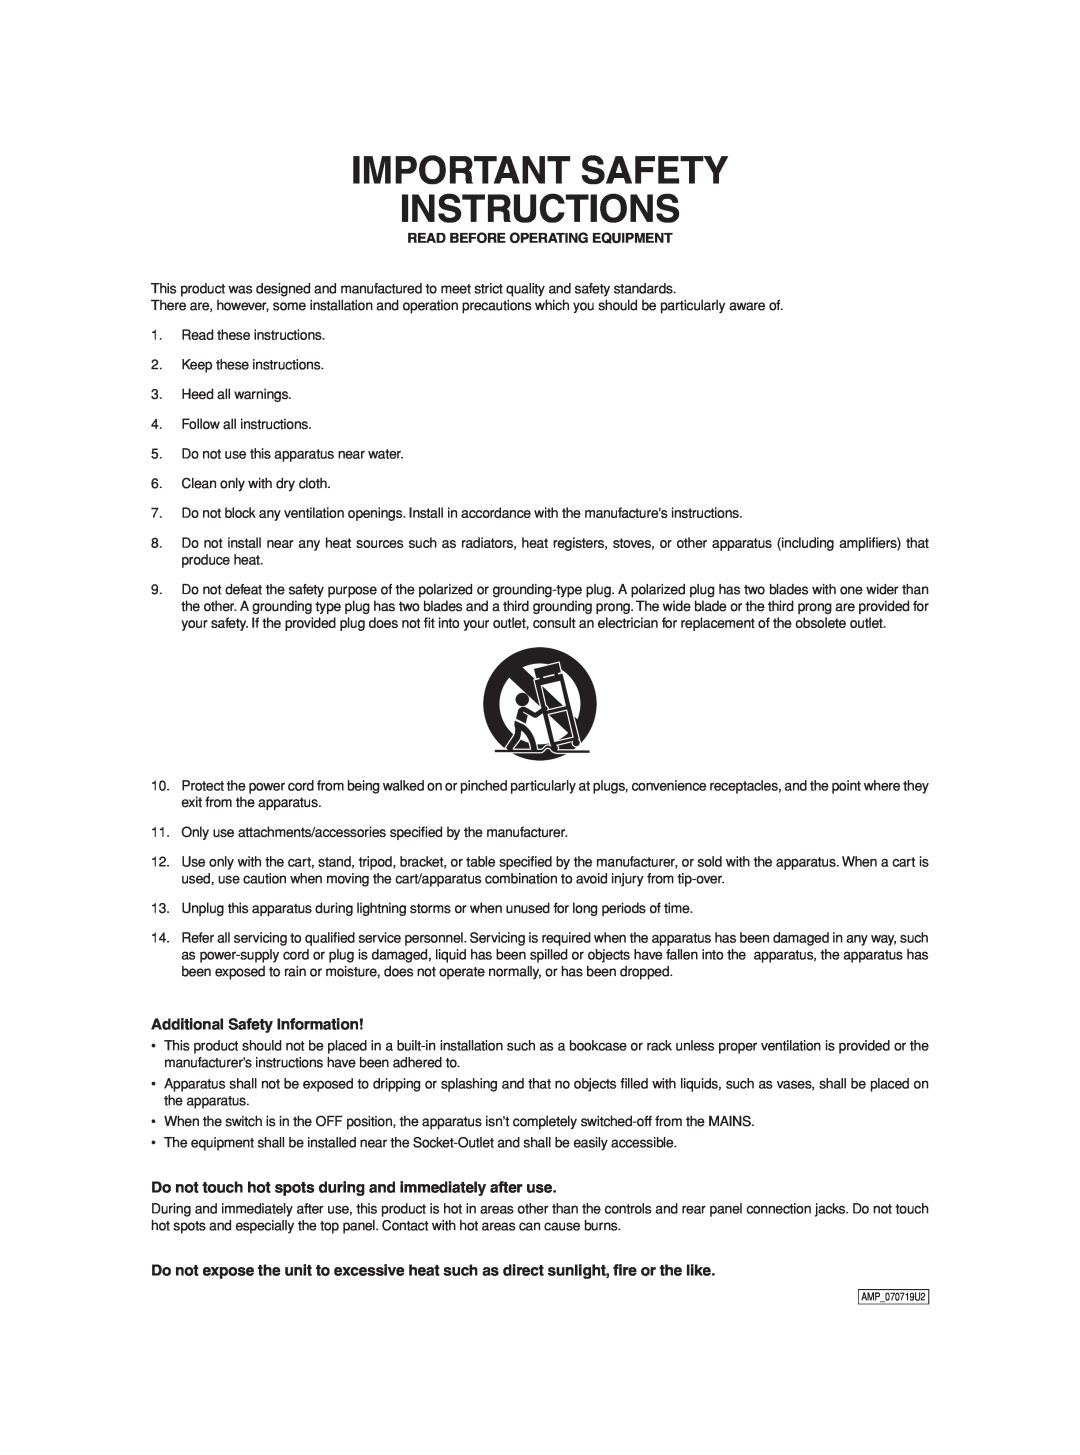 Marantz Model SC-11S1 manual Important Safety Instructions 